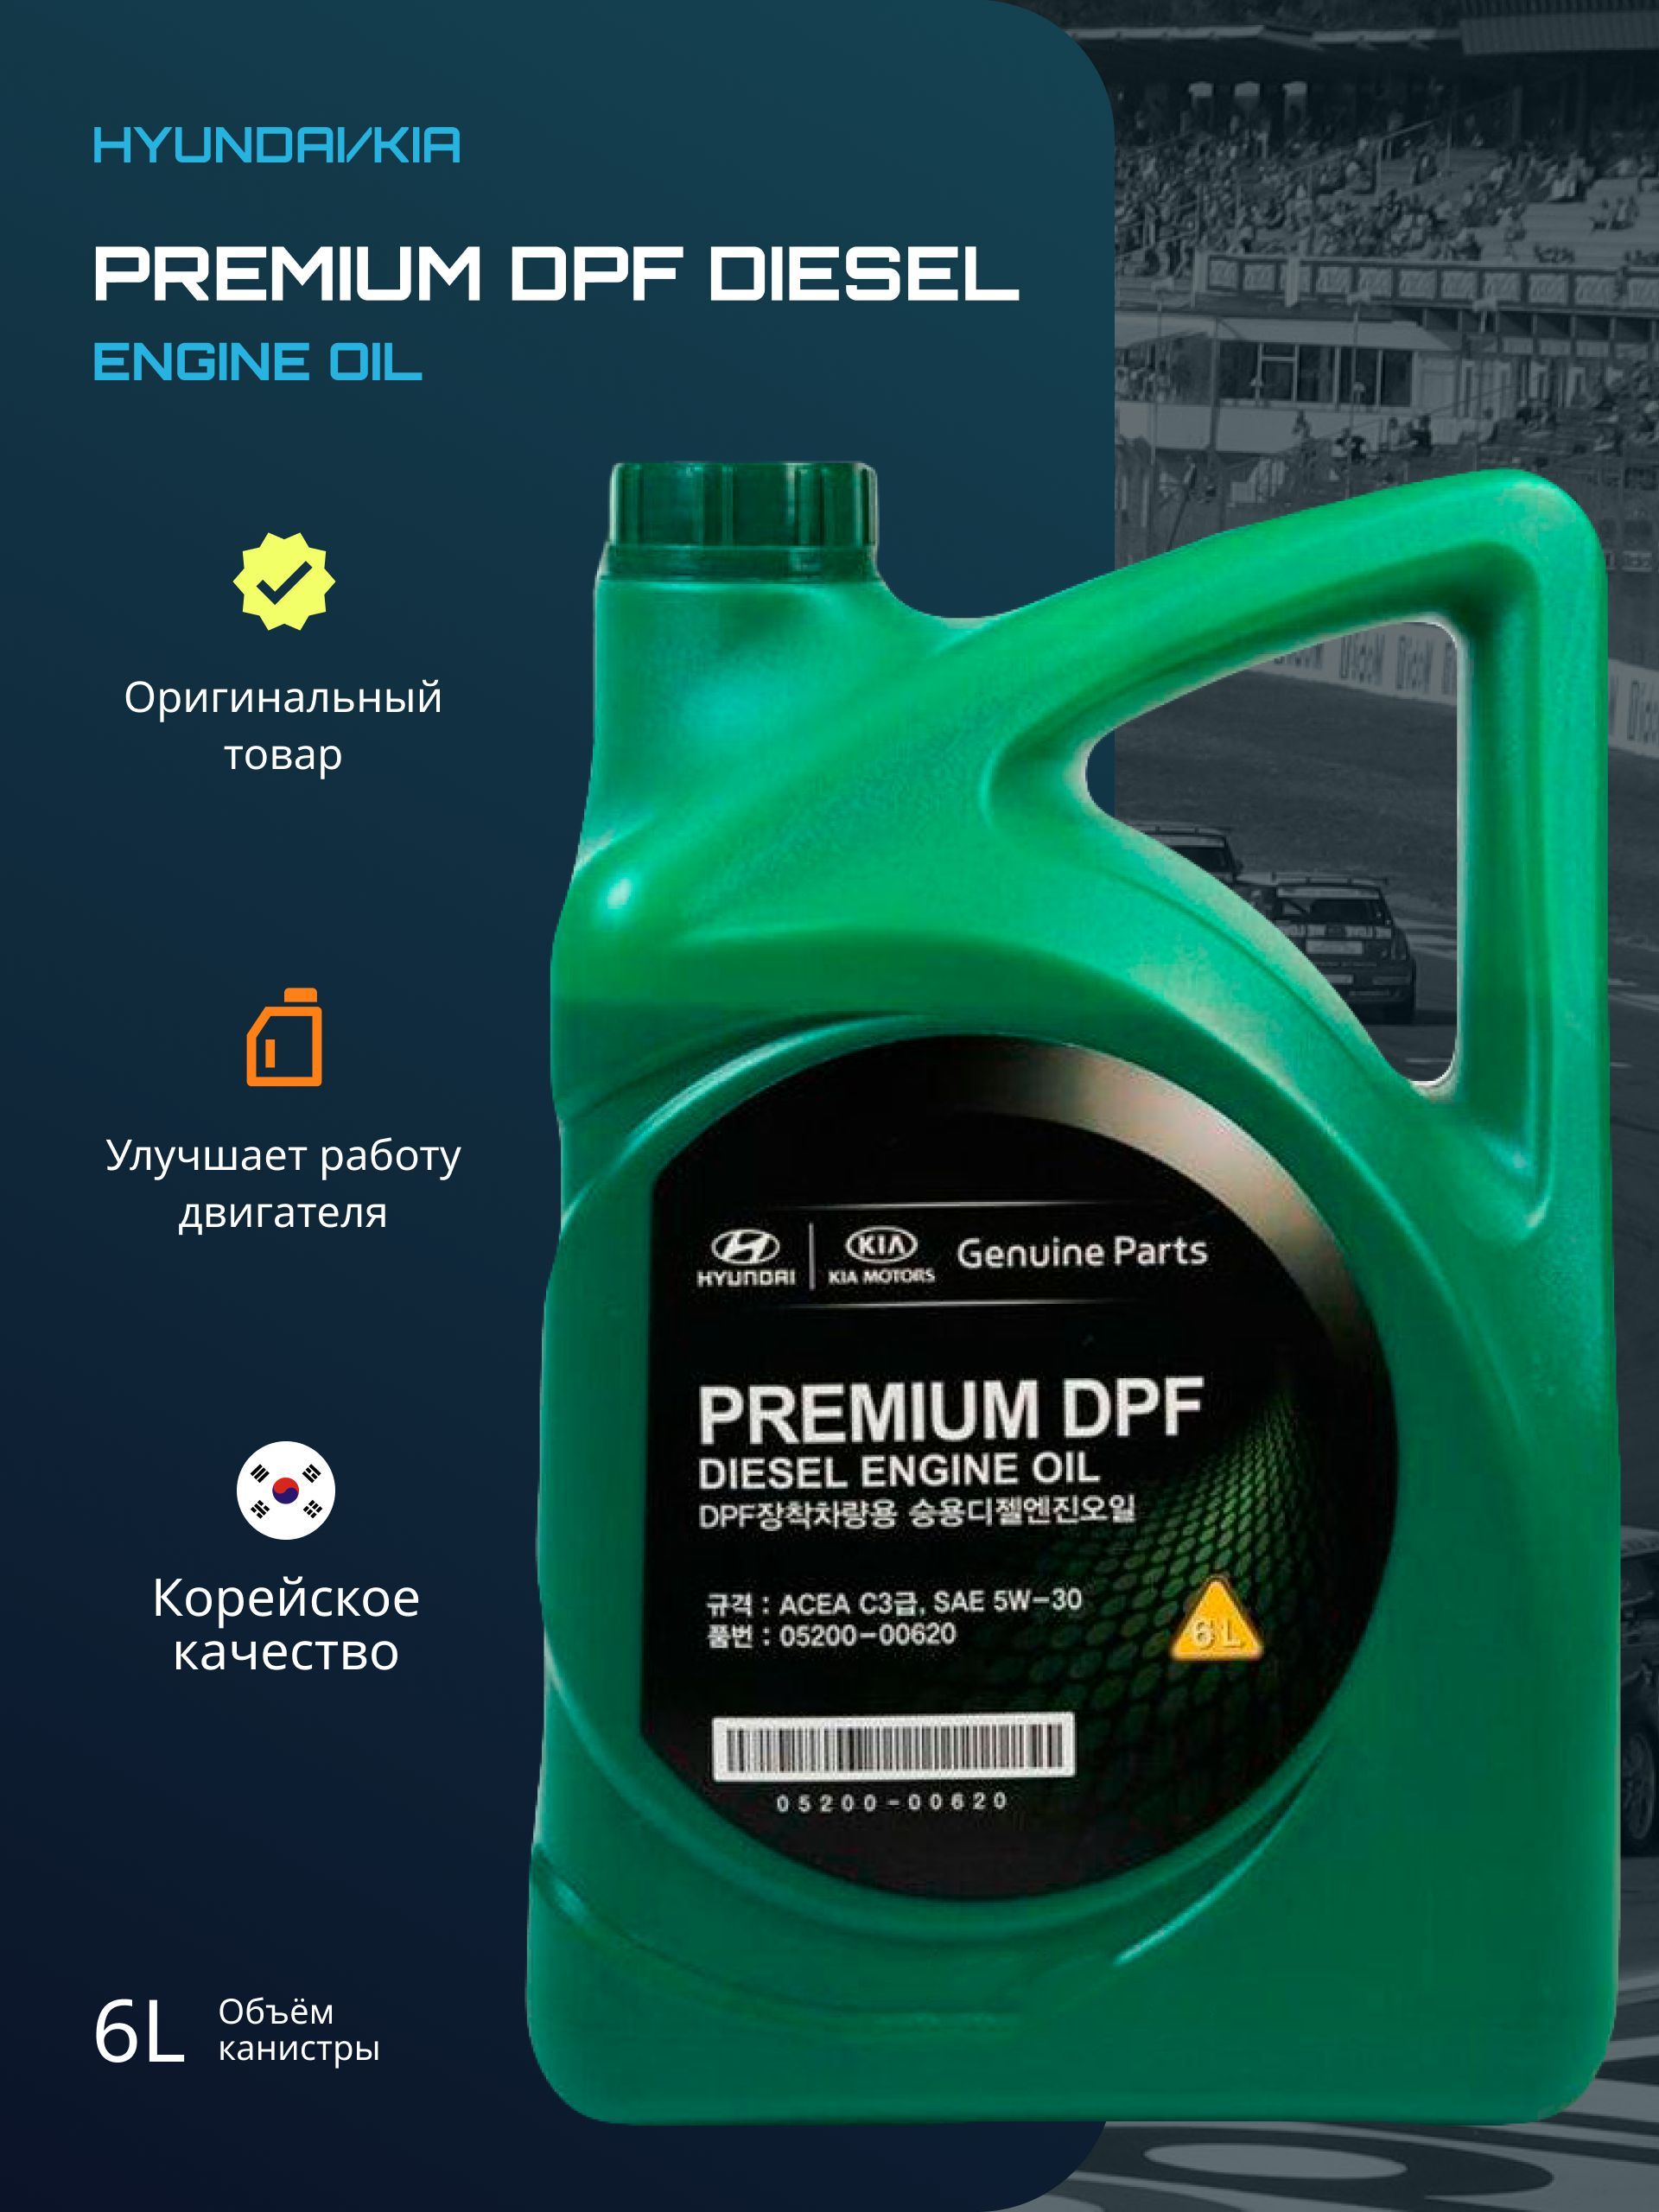 Hyundai Premium DPF Diesel. 0520000620 Hyundai-Kia масло мотор. 6л. Prem. DPF Diesel 5w-30. Как расшифровать дату производства масла Kia Premium DPF Diesel.